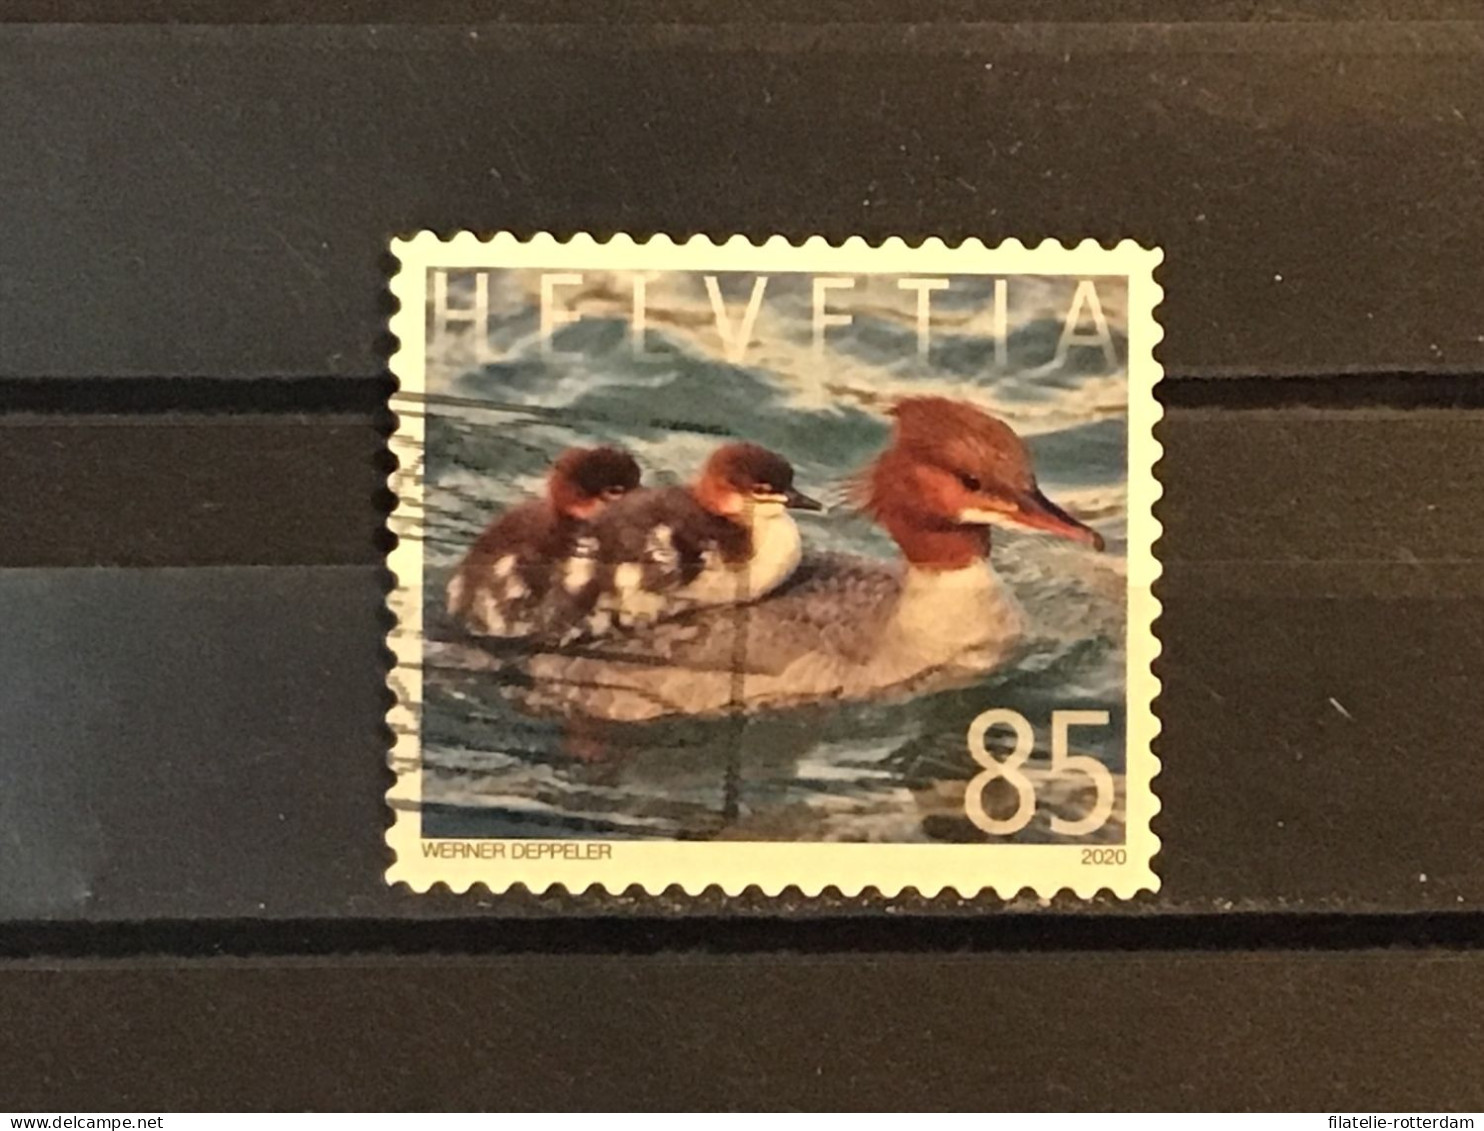 Switzerland / Zwitserland - Animal Families (85) 2020 - Used Stamps